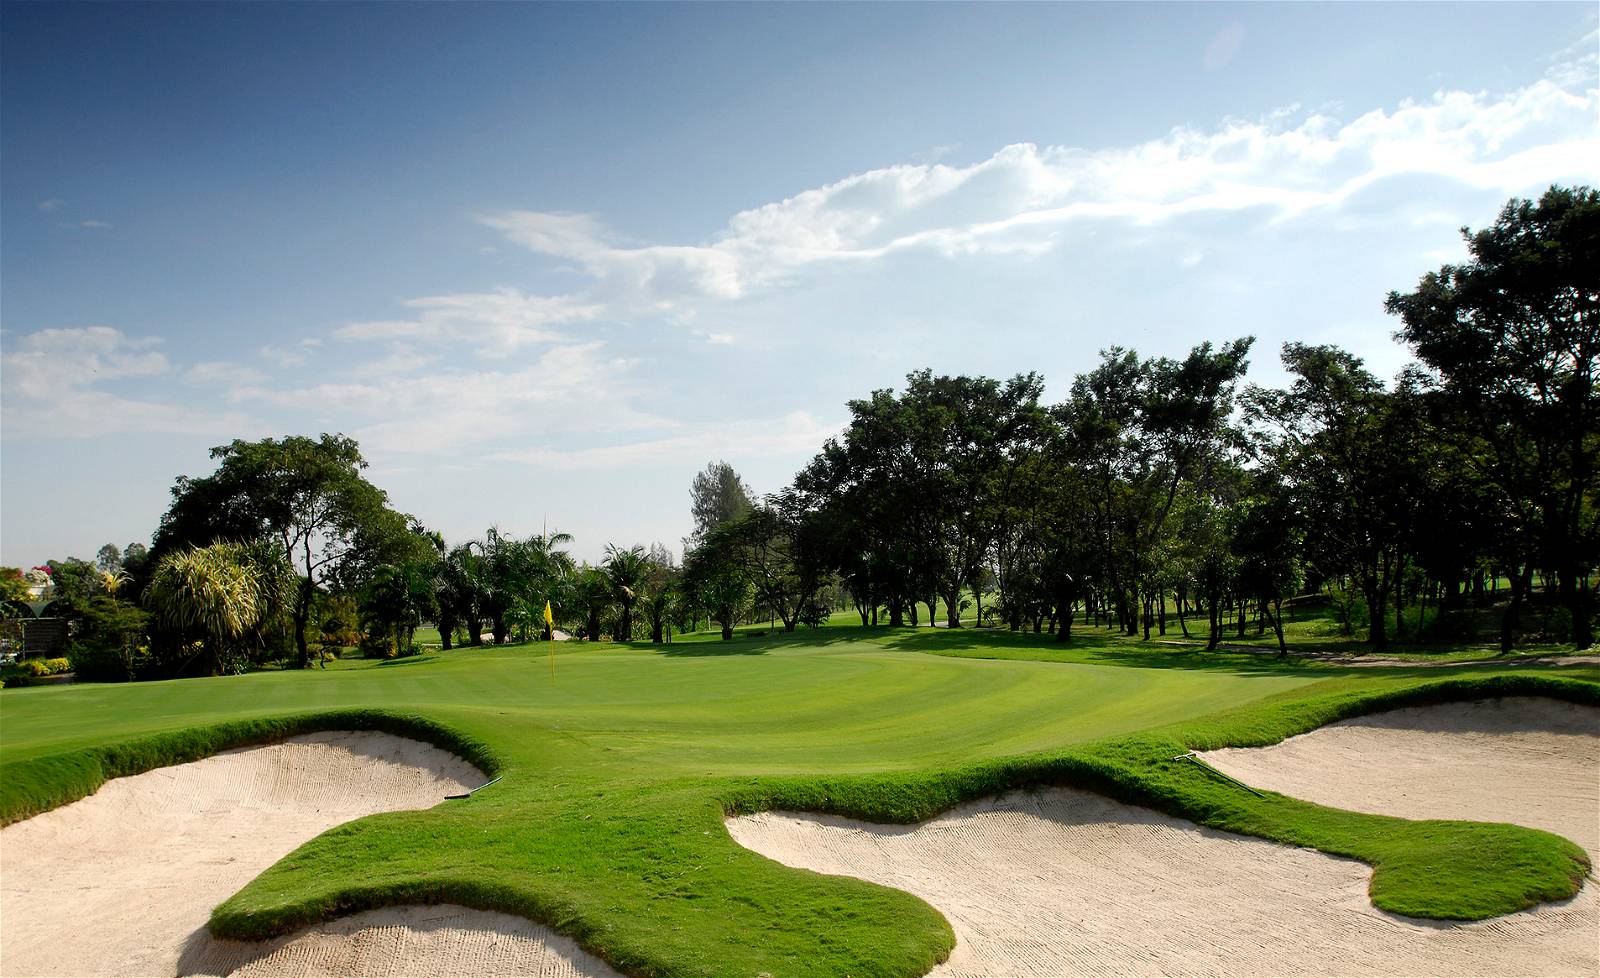 Greenside Bunker, Muang Kaew Golf Club, Bangkok, Thailand